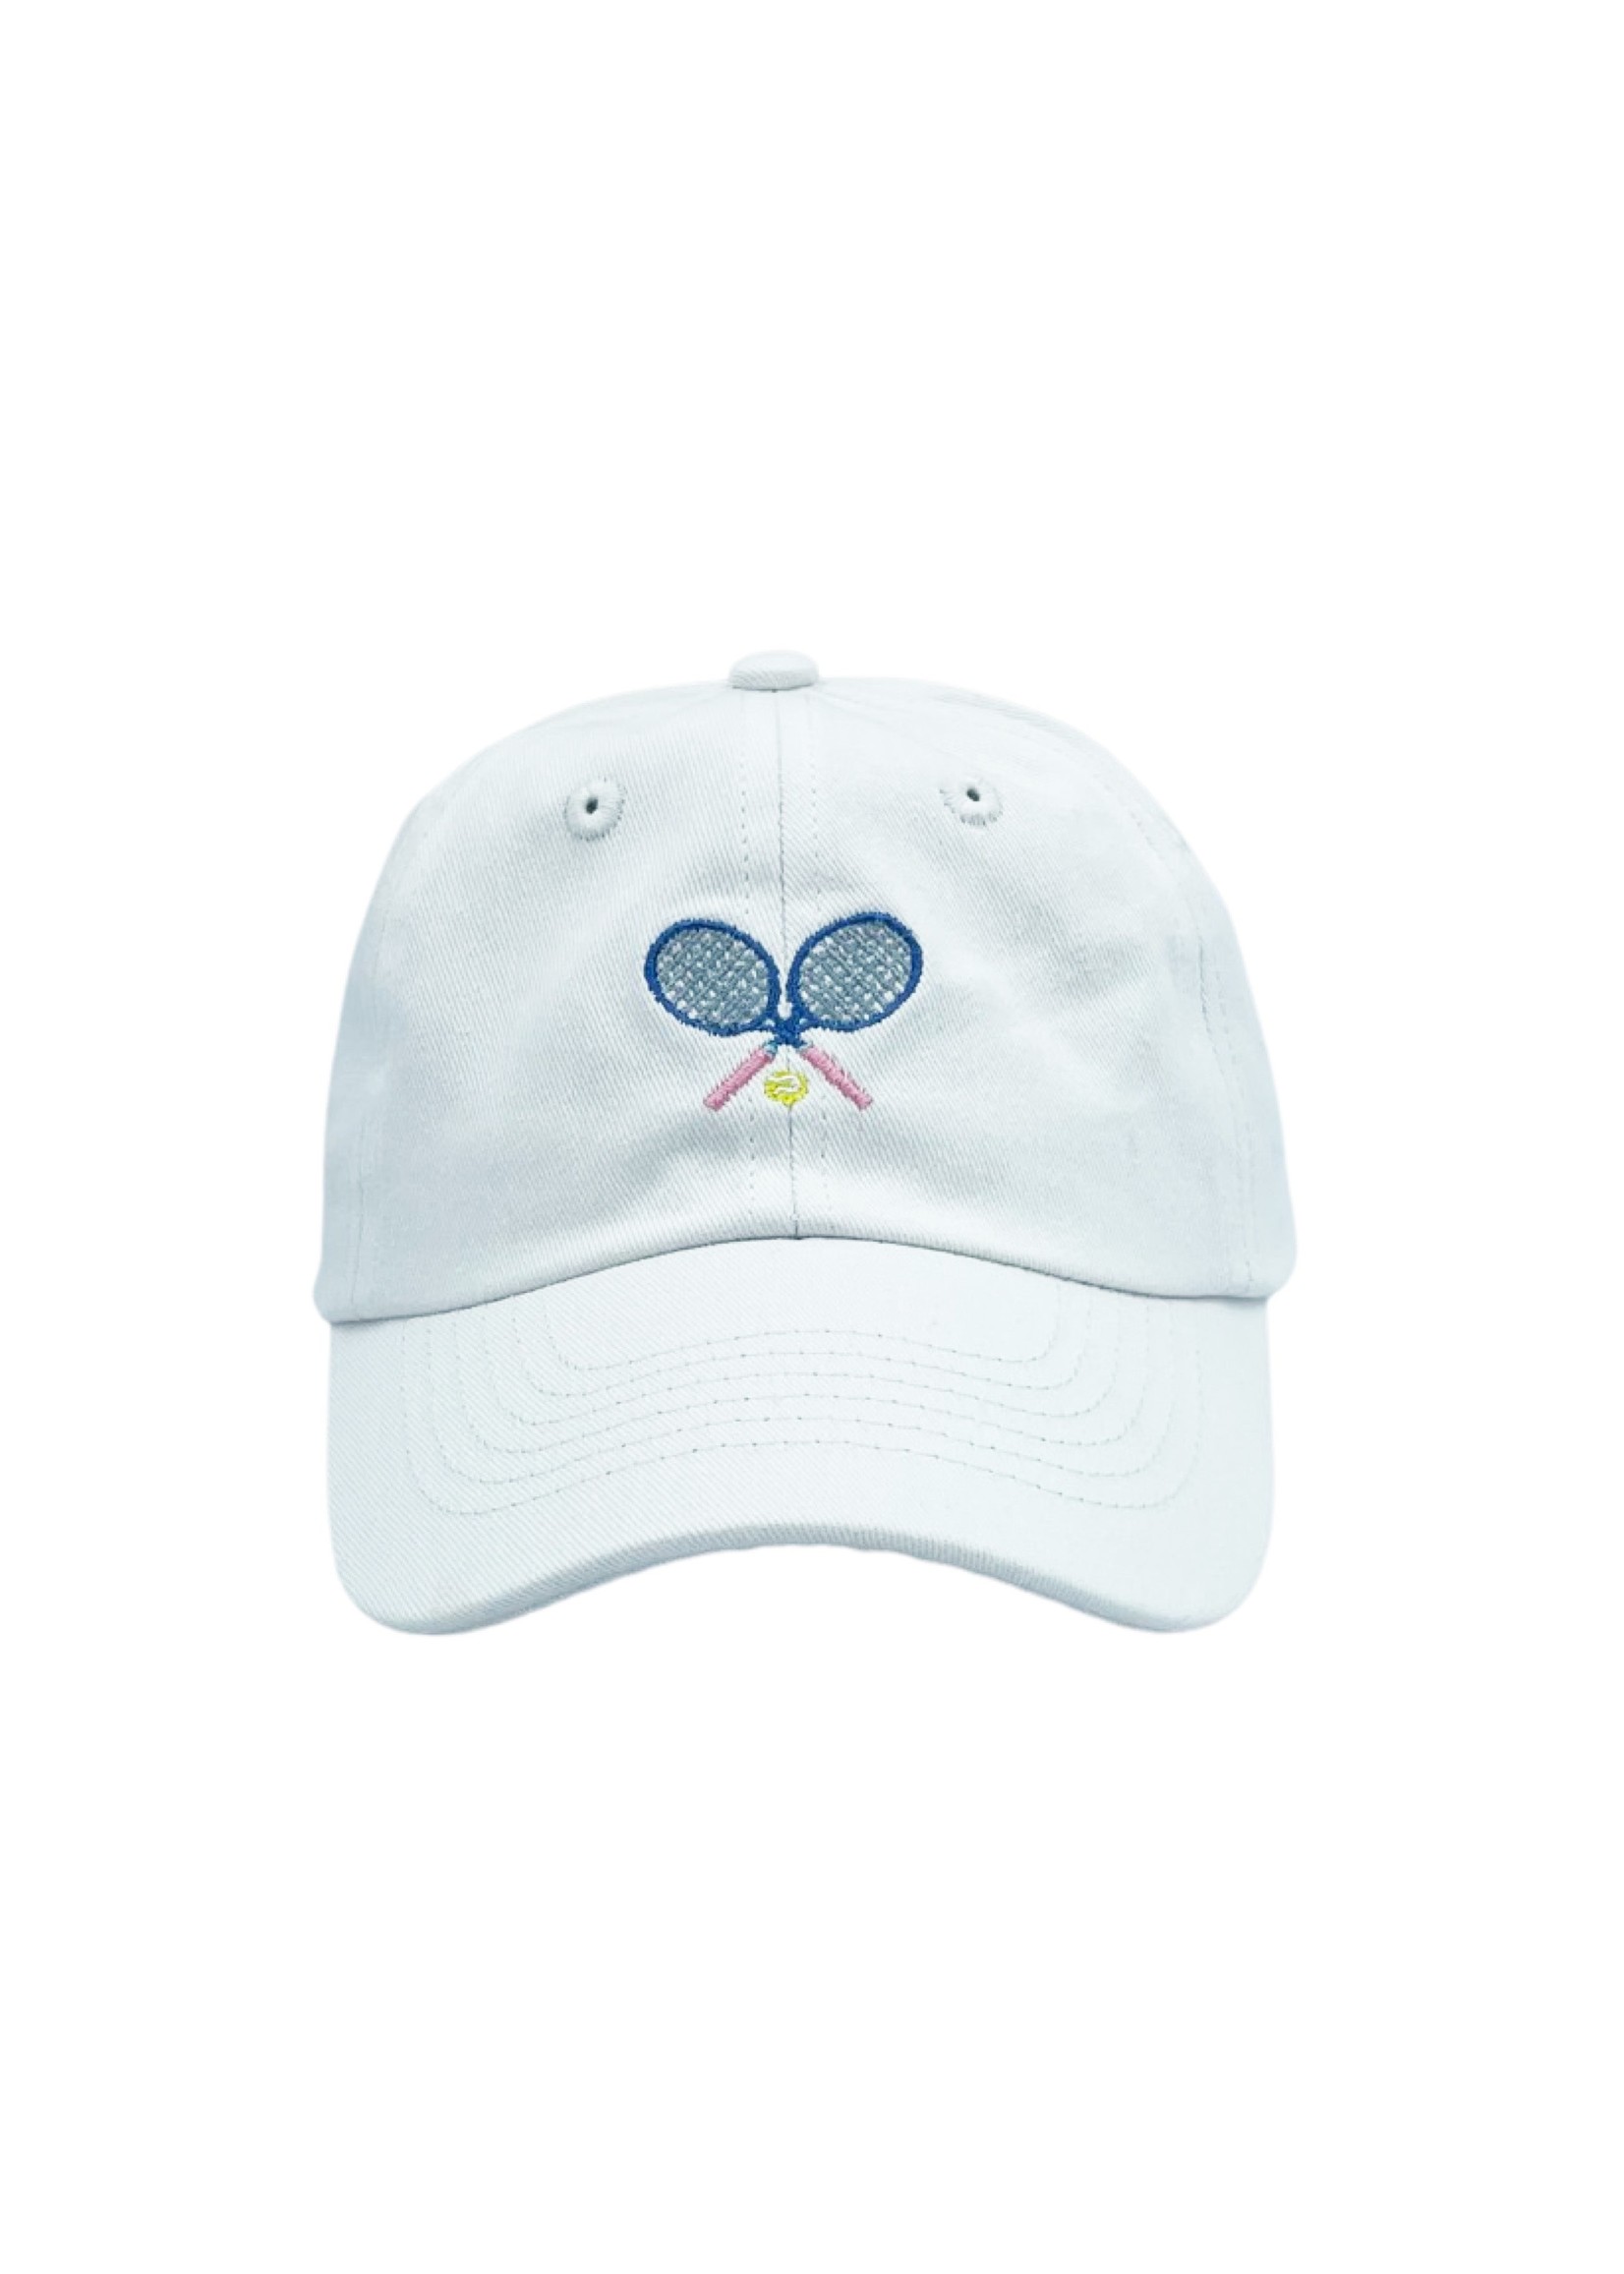 Bits & Bows Bits & Bows Tennis White Hat - Pink/White Seersucker Bow